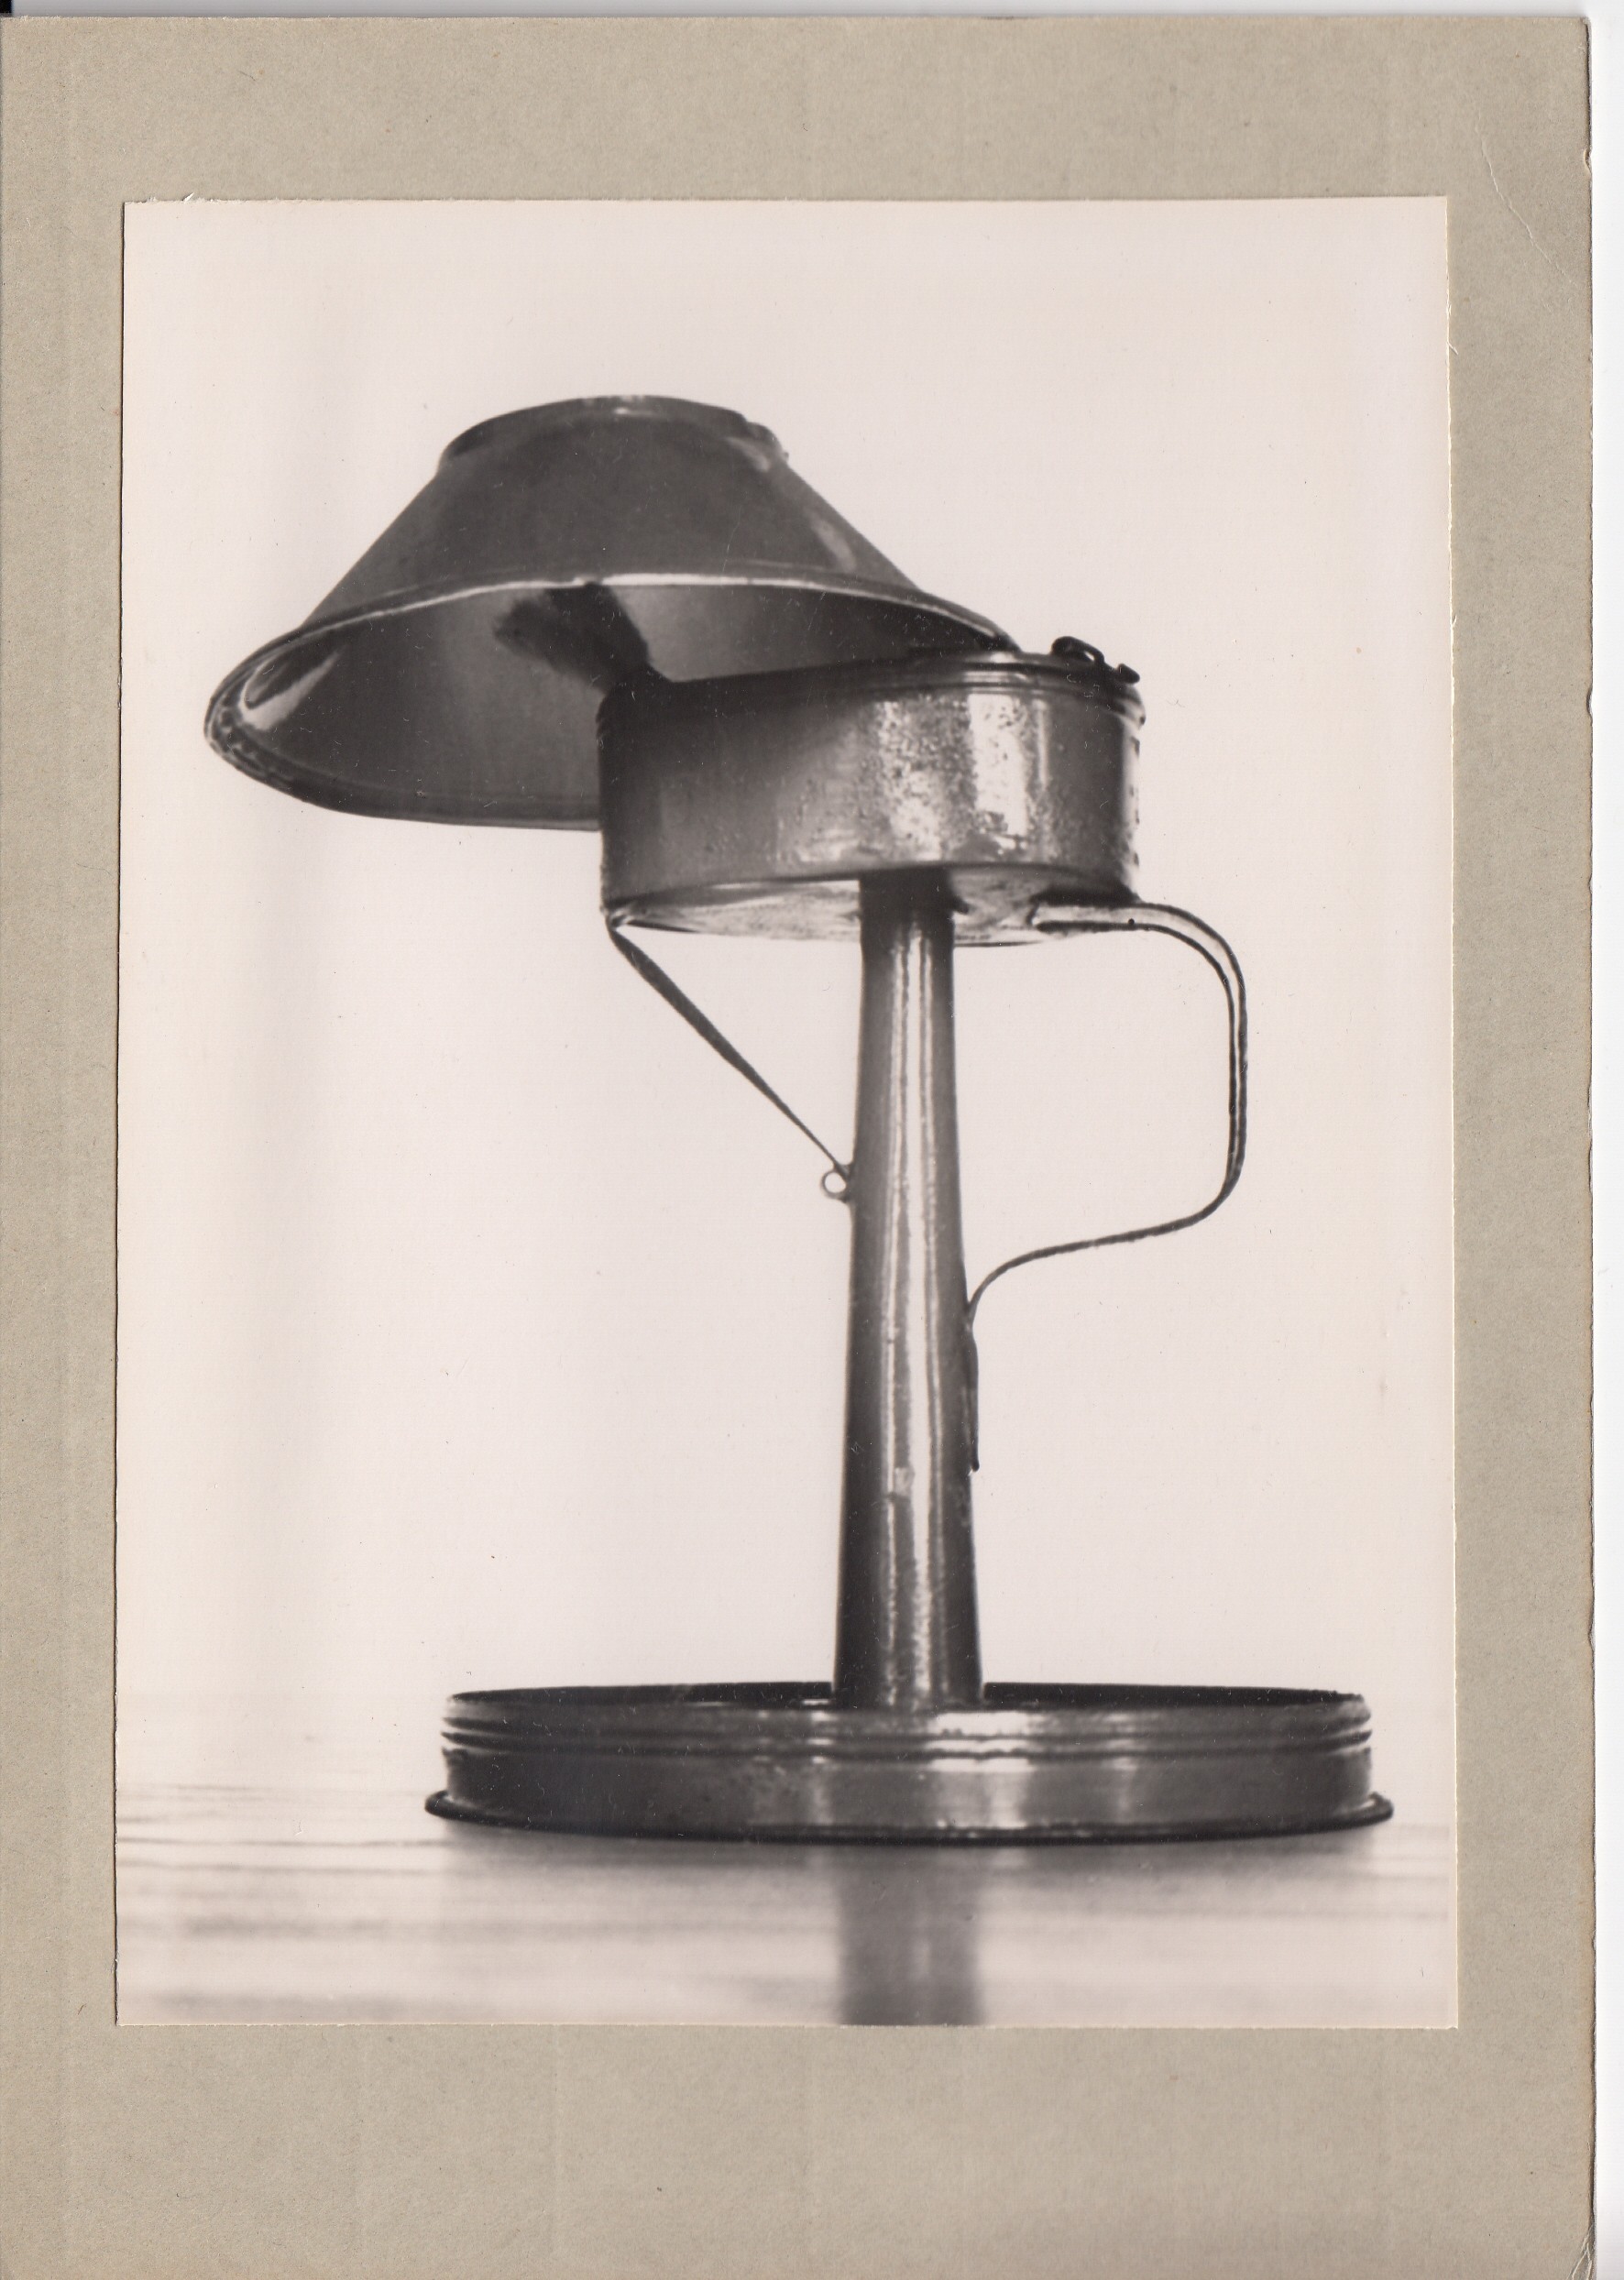 785: Öllampe (Albert-Heyde-Stiftung CC BY-NC-SA)